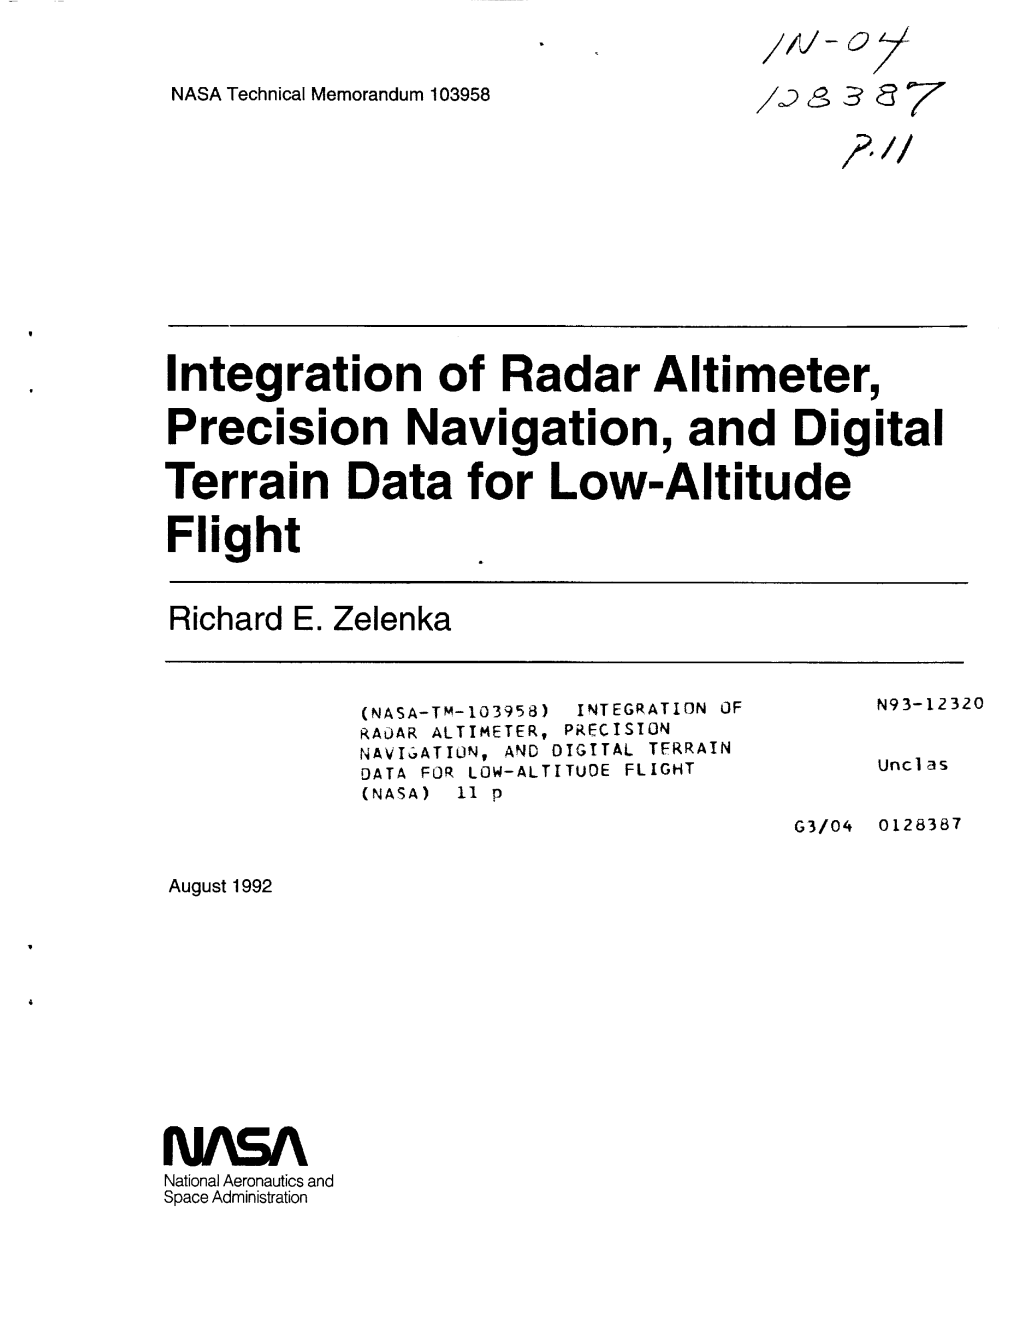 Integration of Radar Altimeter, Precision Navigation, and Digital Terrain Data for Low-Altitude Flight